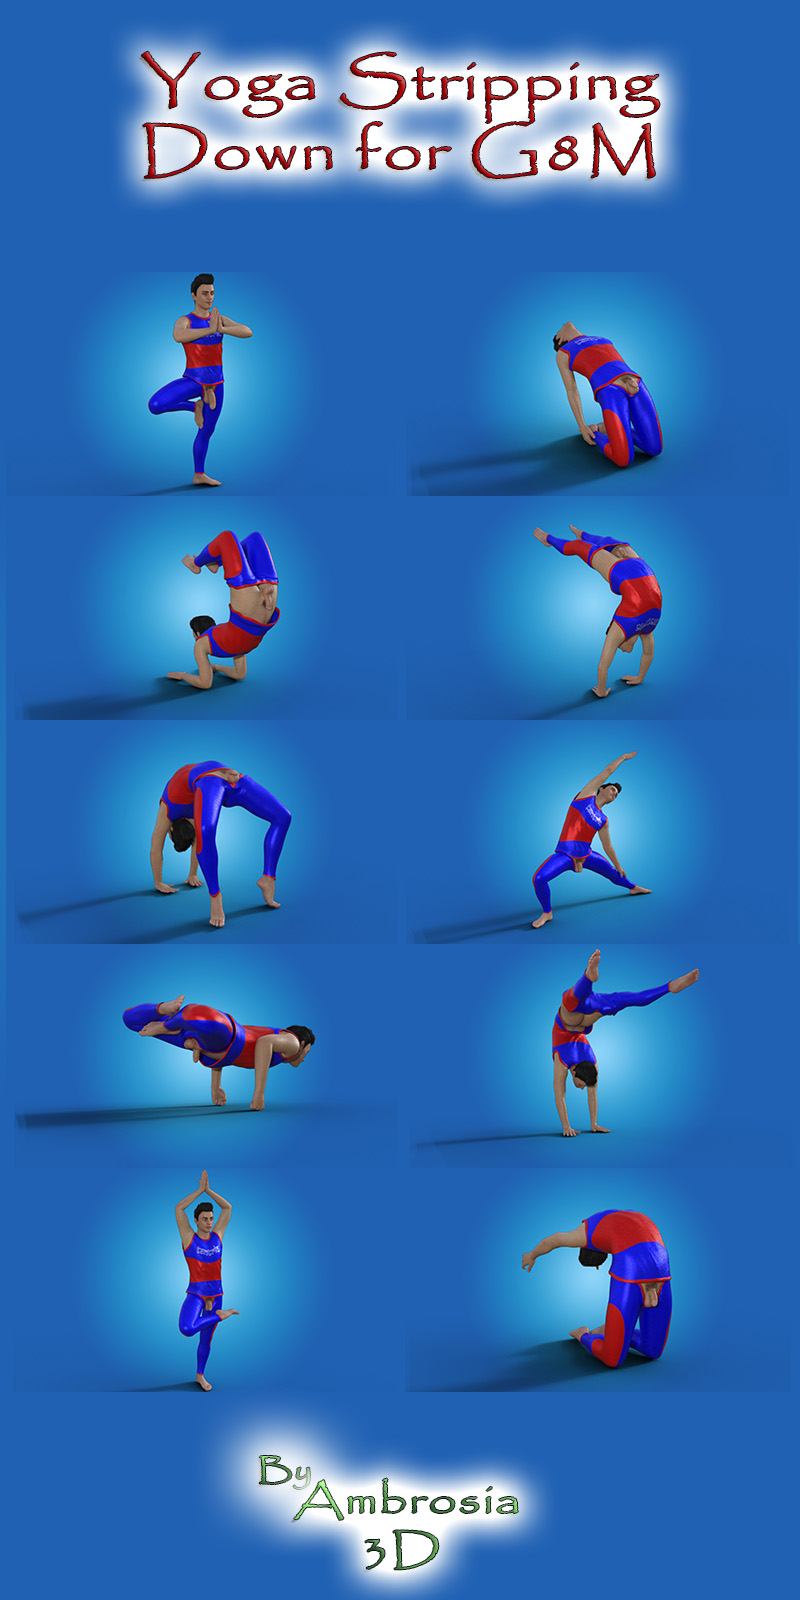 Ambrosia3d Yoga Stripping Down G8M